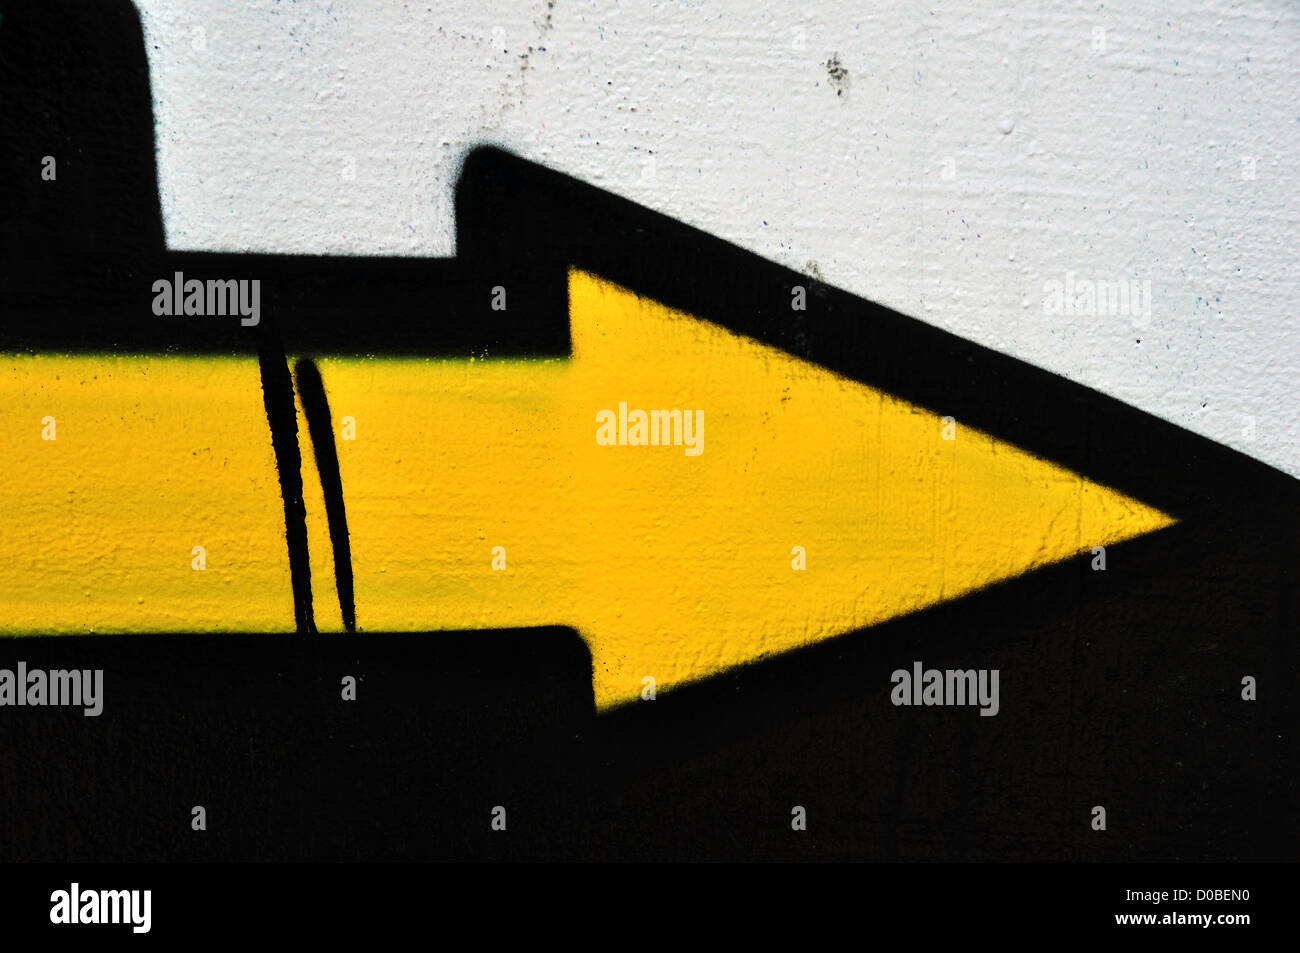 Yellow arrow graffiti sprayed on wall. Abstract background texture. Stock Photo